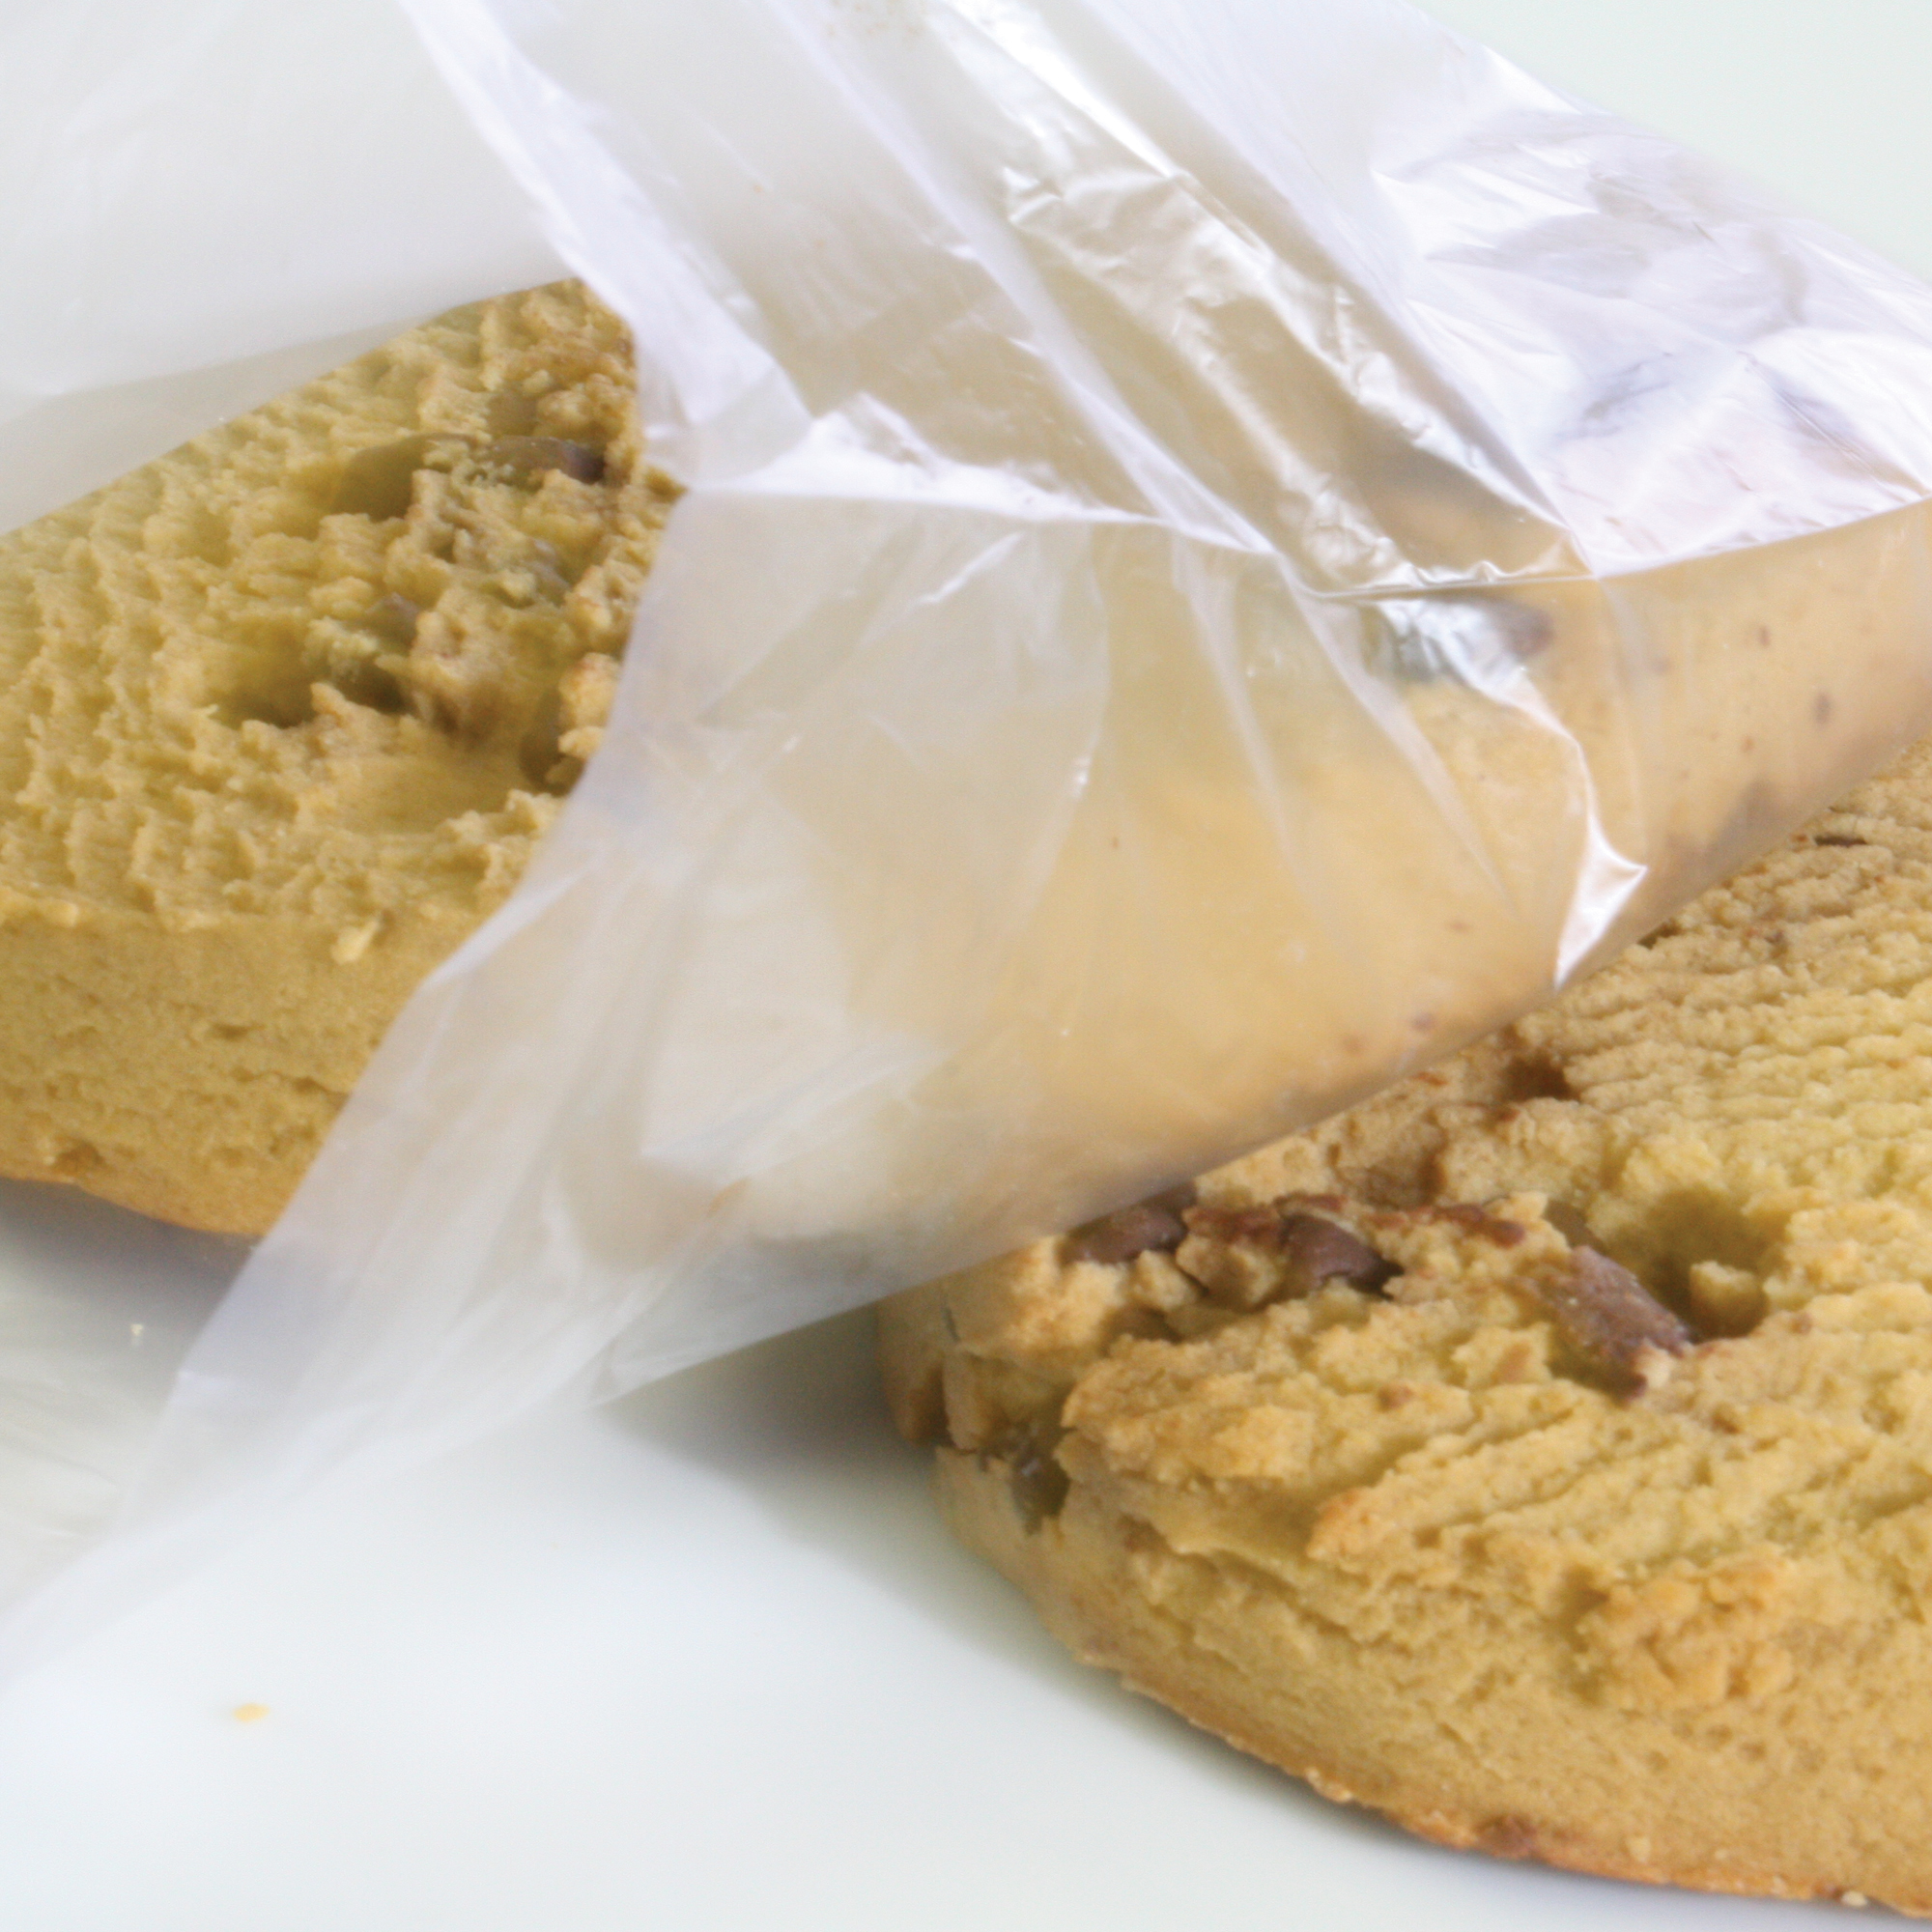 Tuffgards® High Density Disposable Sandwich Bags – SB9.5 Clear – Handgards®